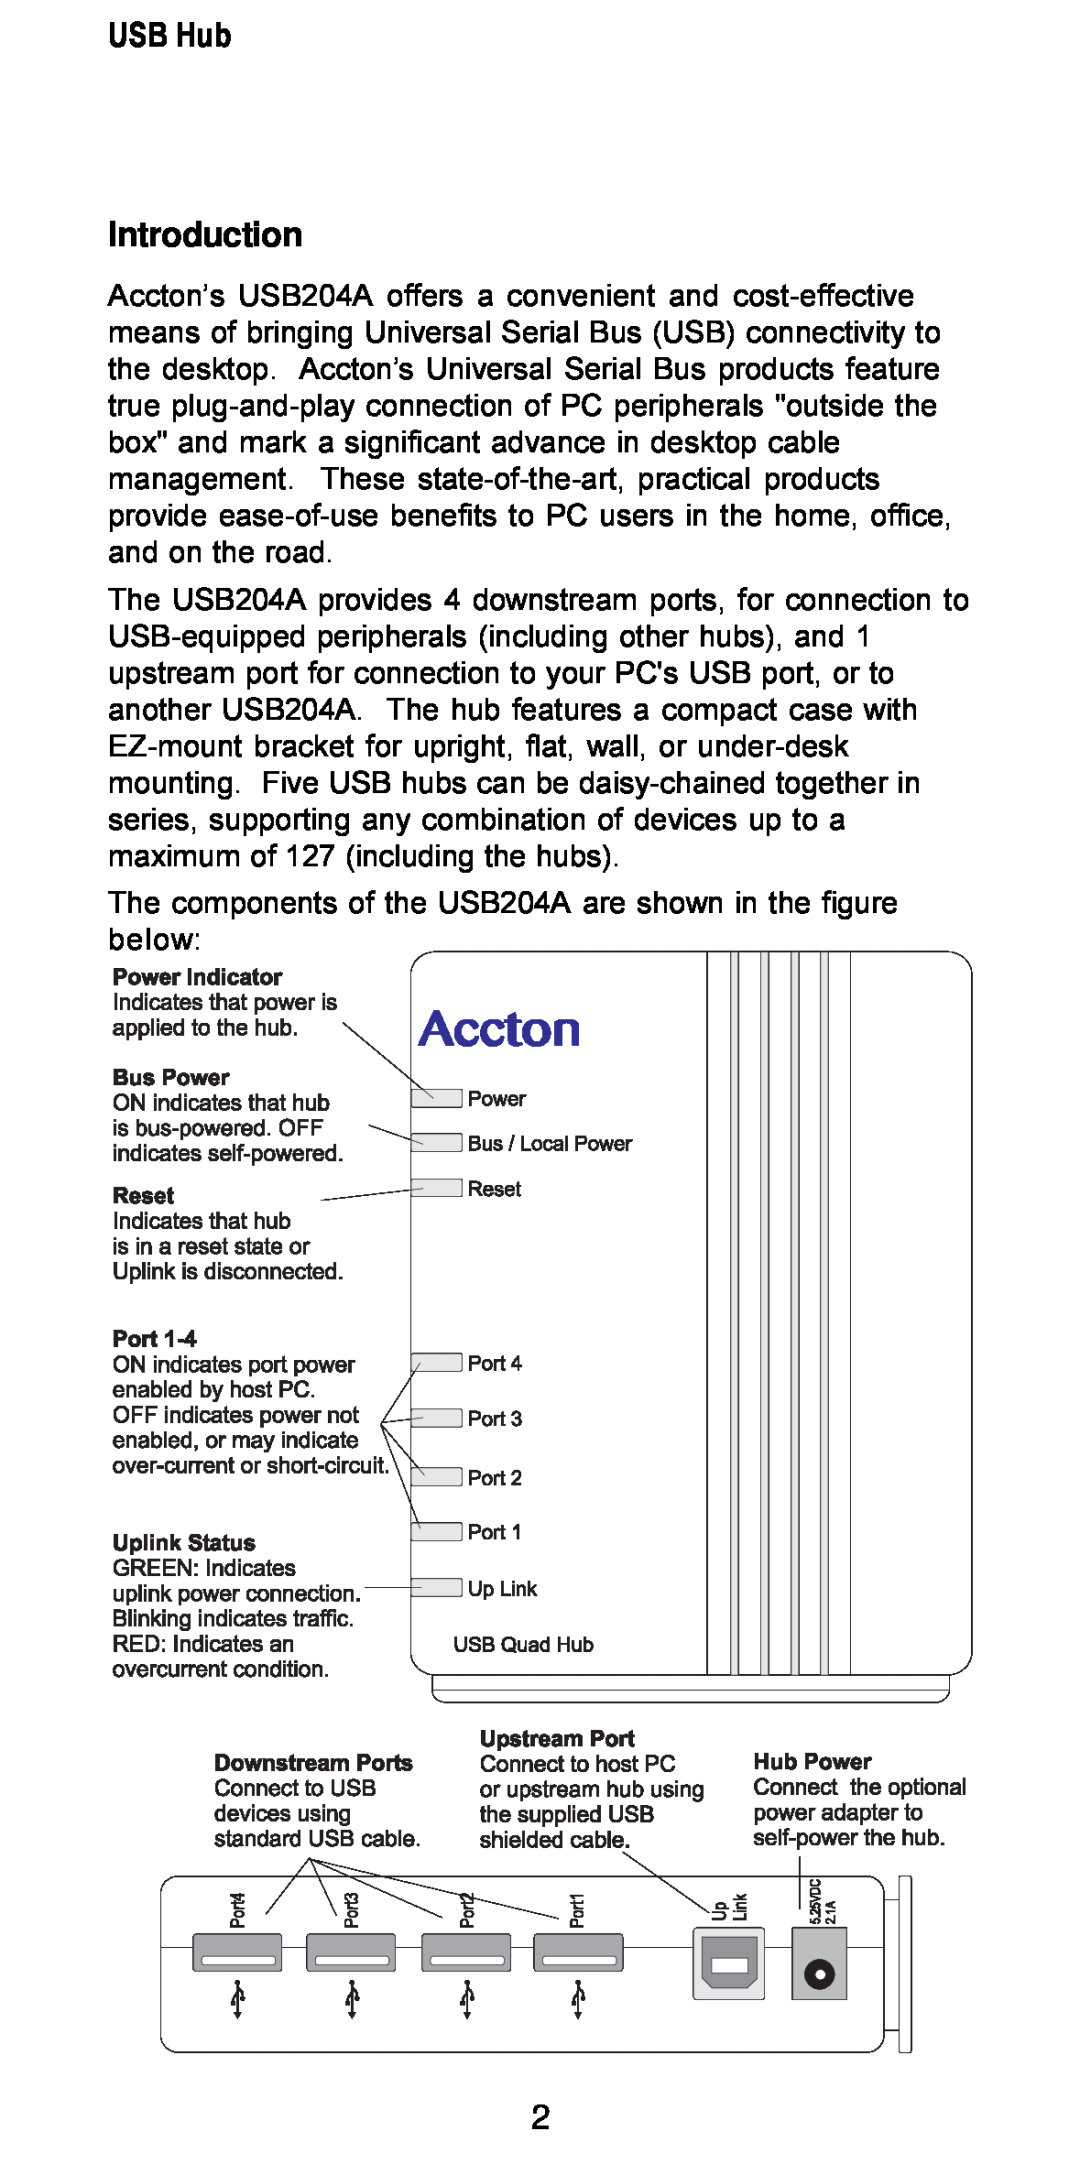 Accton Technology USB204A manual USB Hub Introduction 